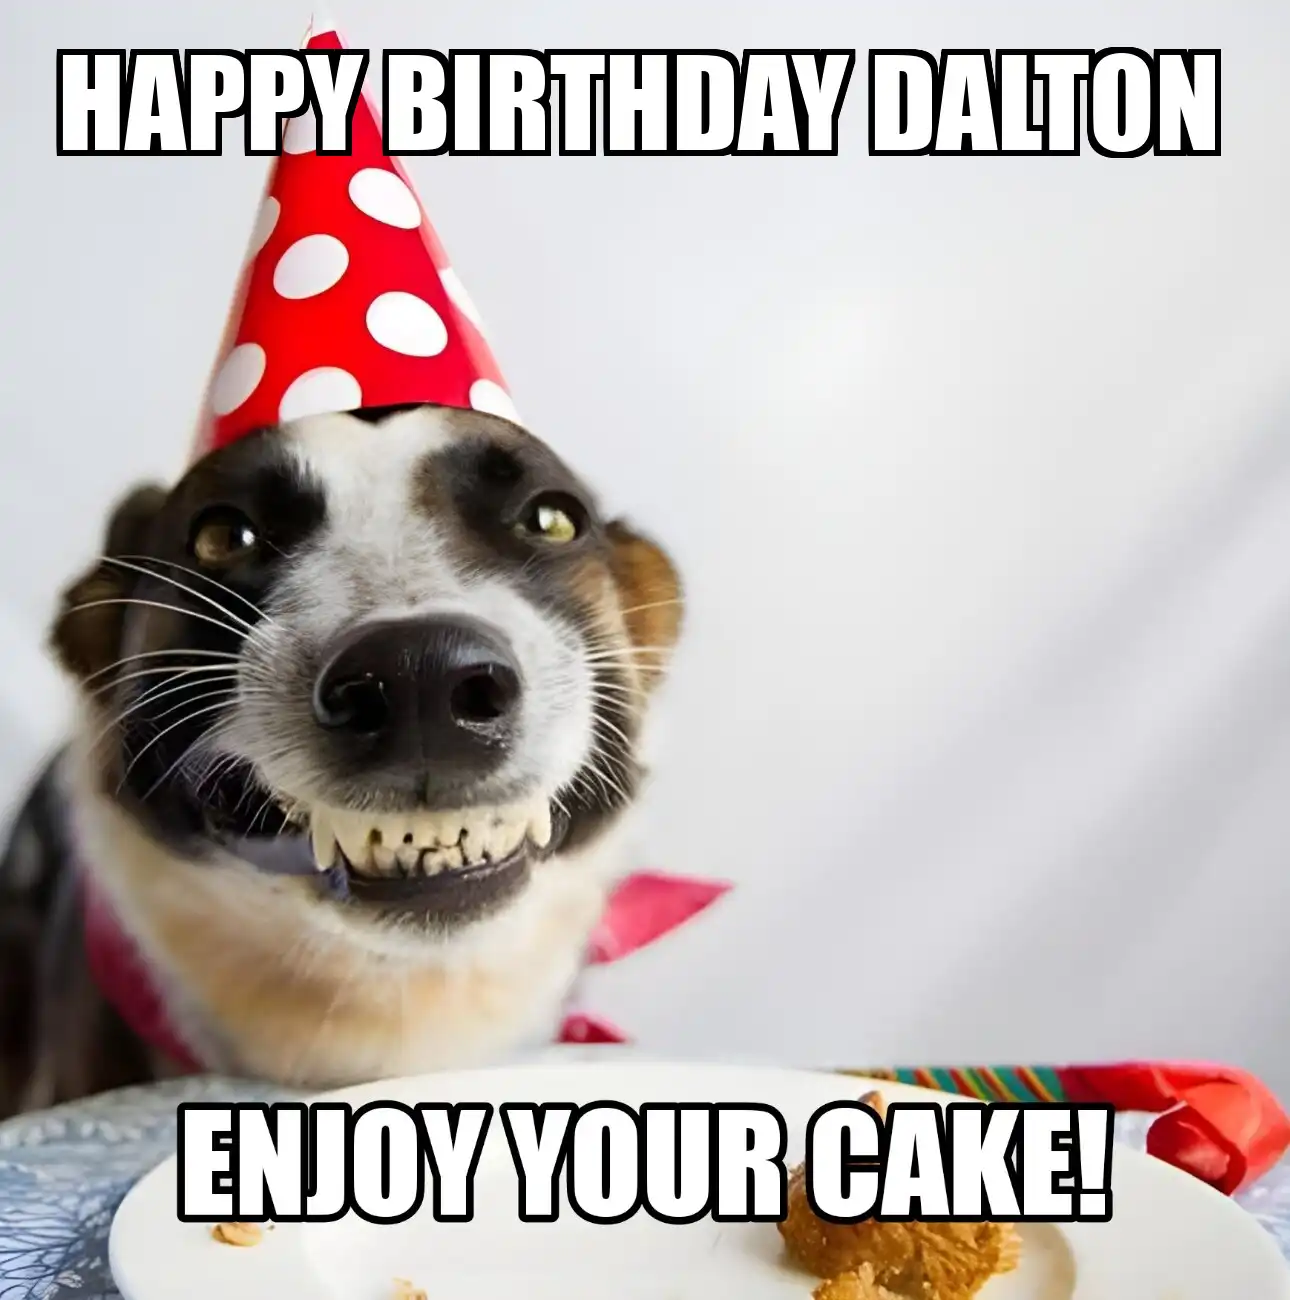 Happy Birthday Dalton Enjoy Your Cake Dog Meme